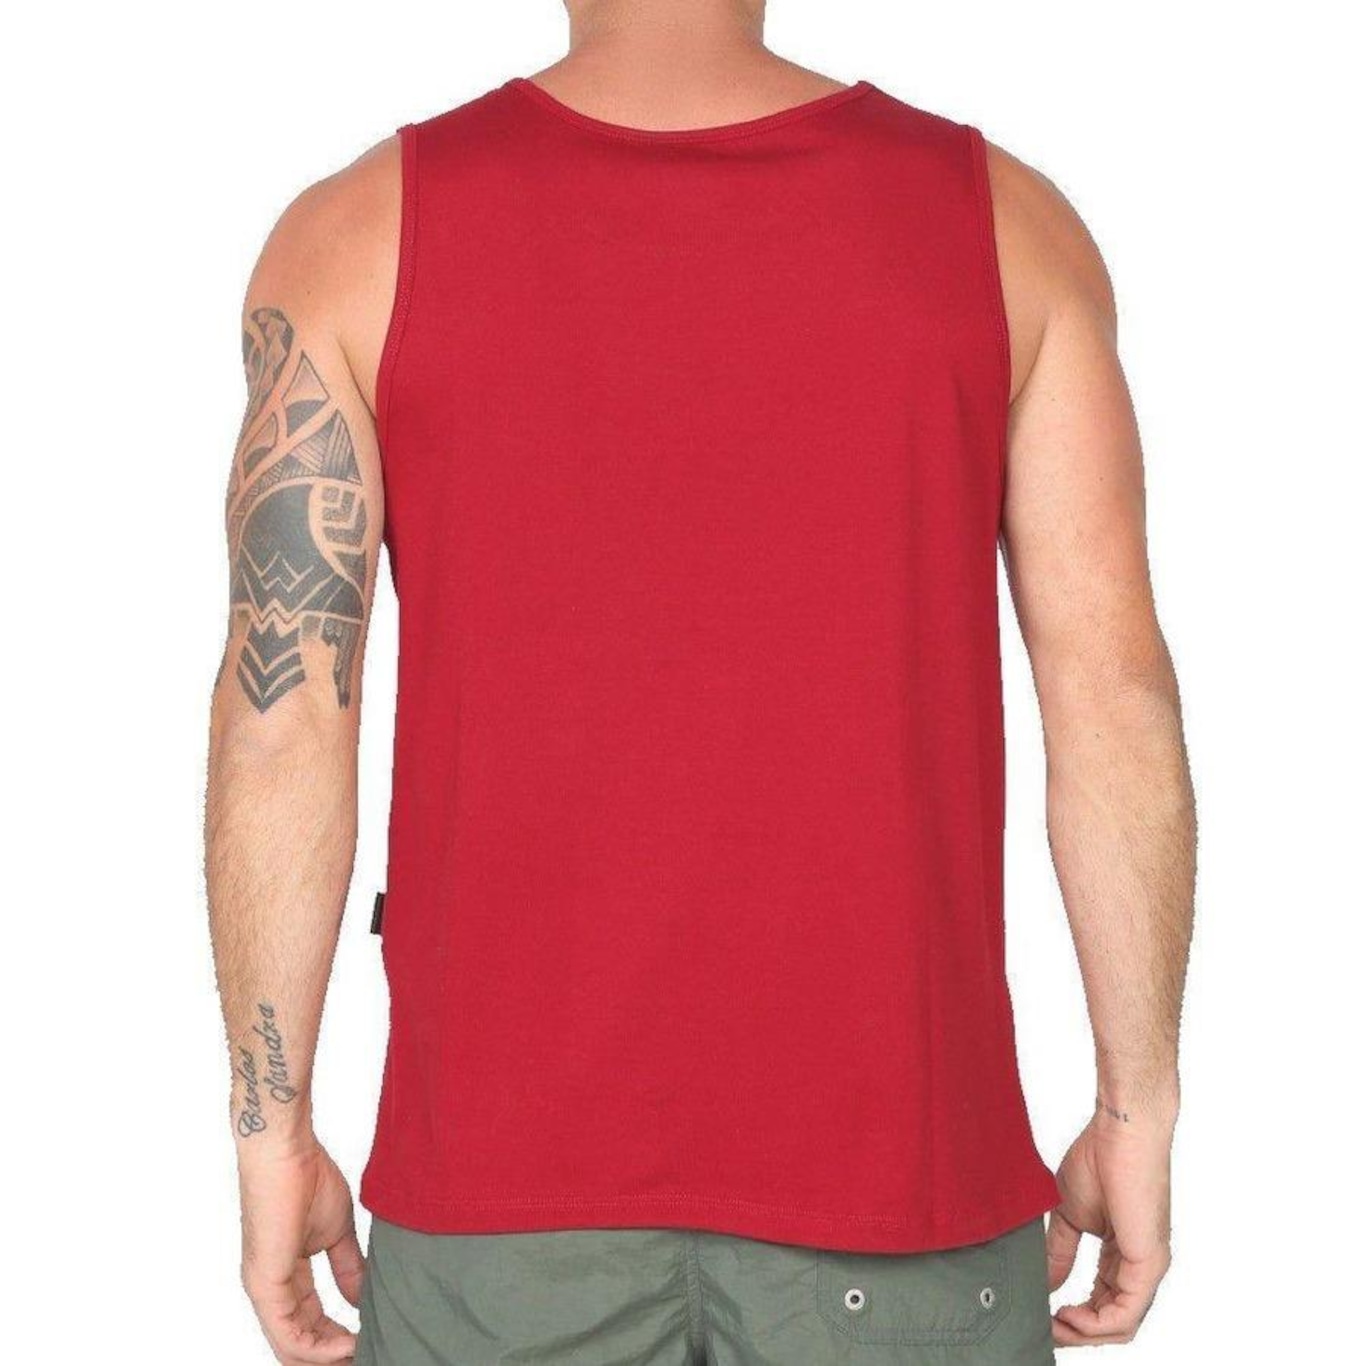 Camiseta Oakley Patch 2.0 Masculina - Vermelho